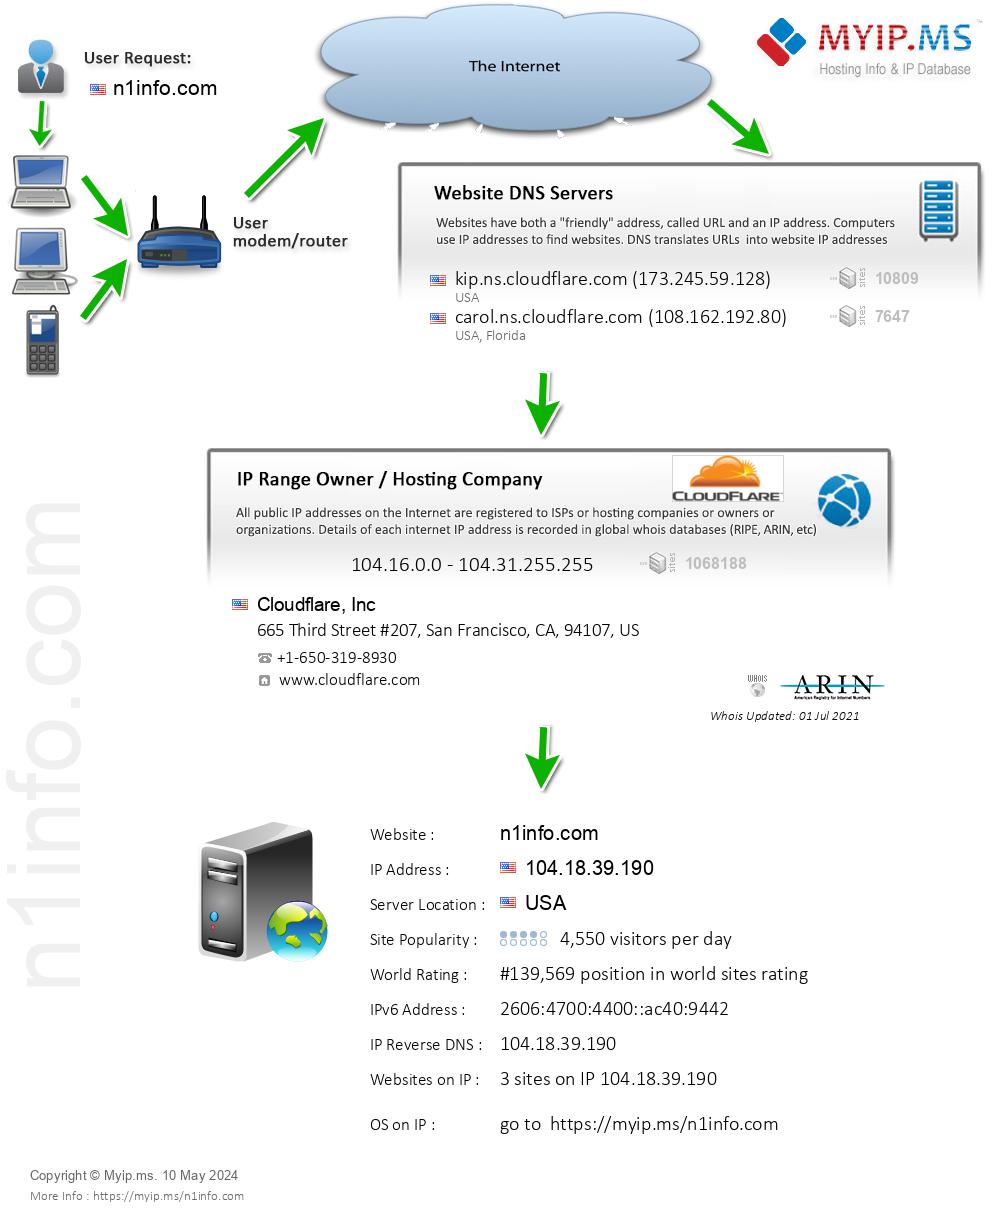 N1info.com - Website Hosting Visual IP Diagram